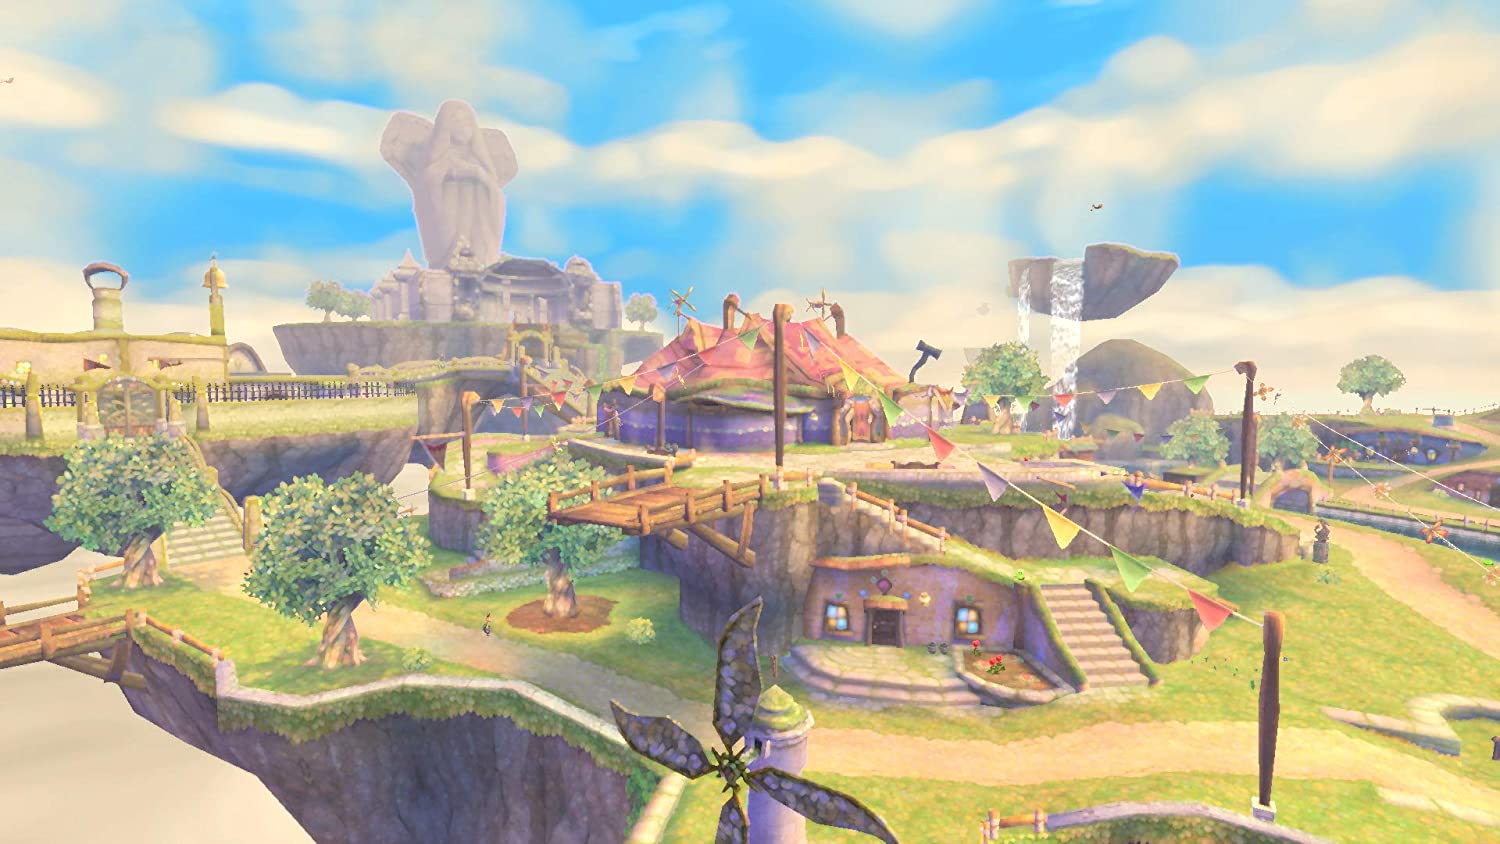 The Legend of Zelda Skyward Sword HD - Nintendo Switch